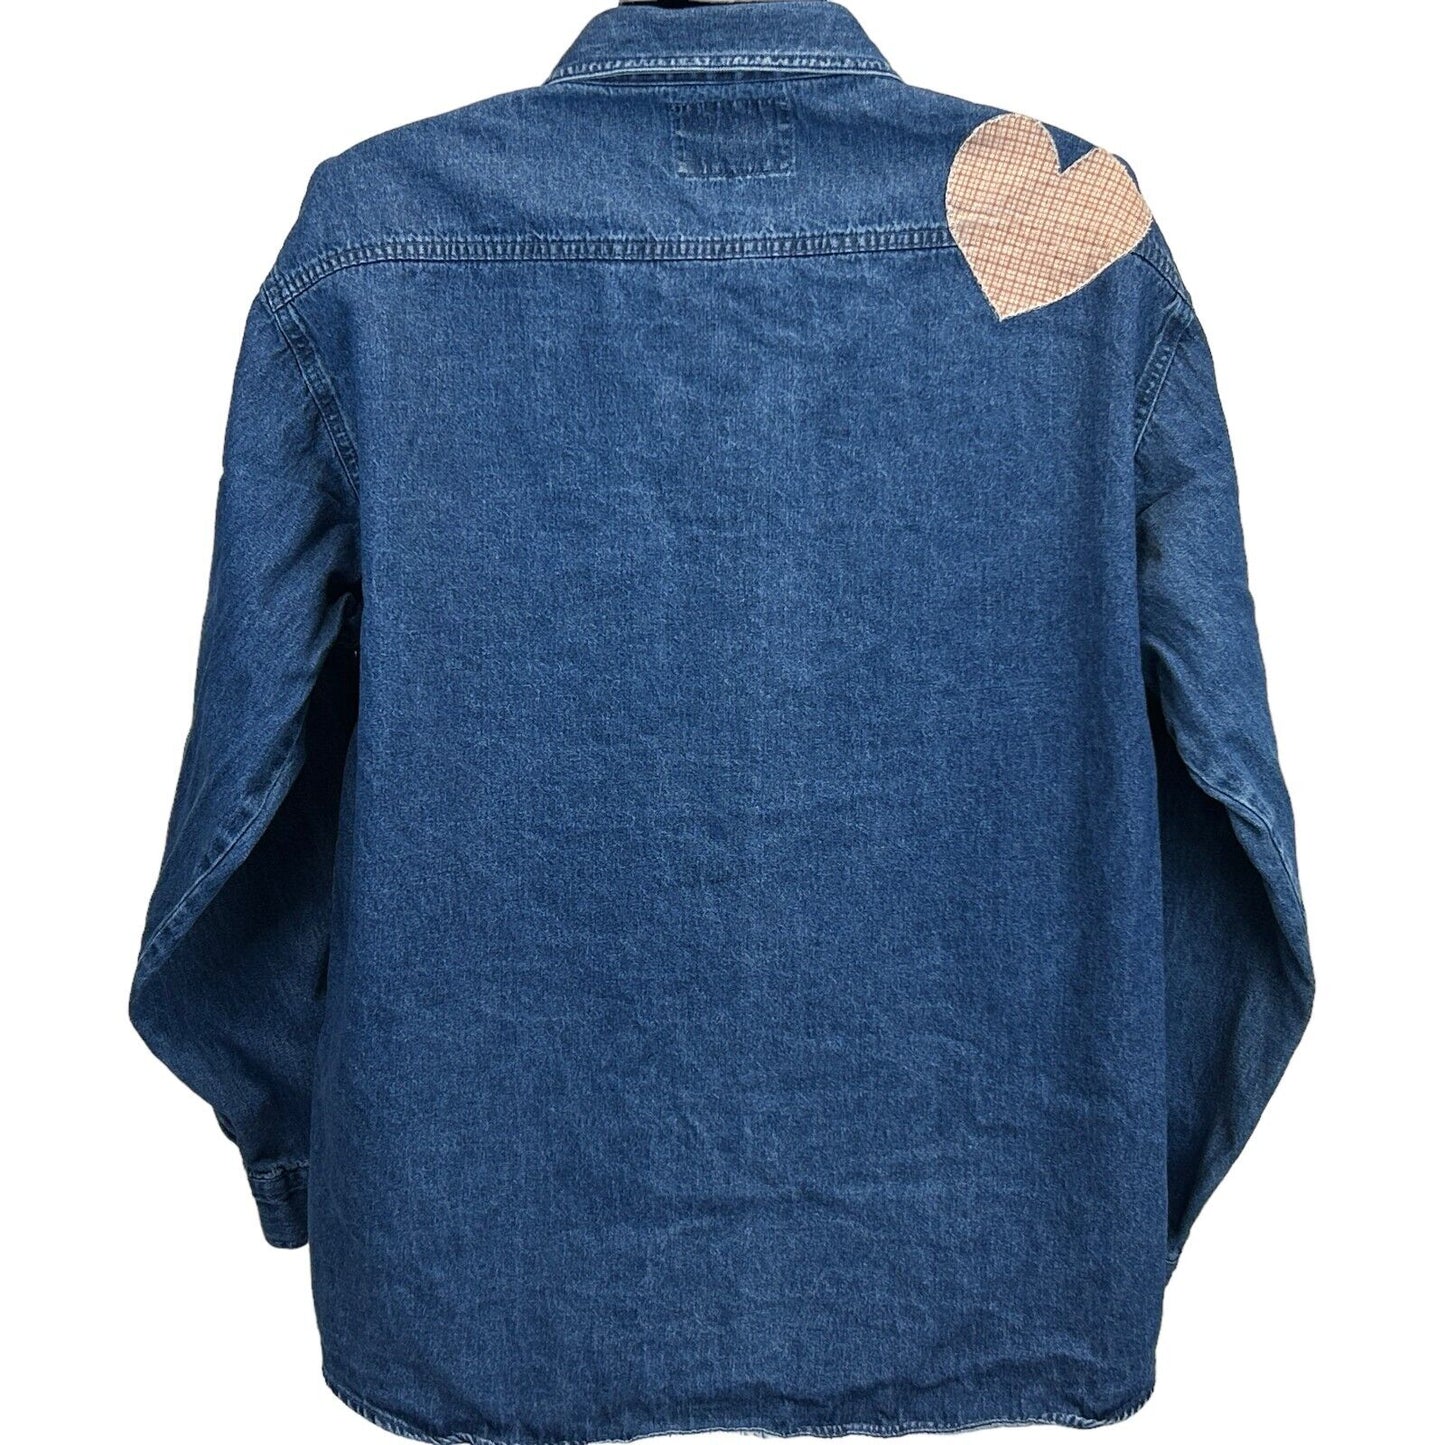 Lighthouse Mixed Media Art Denim Button Front Shirt Vintage 90s Blue Jean XL